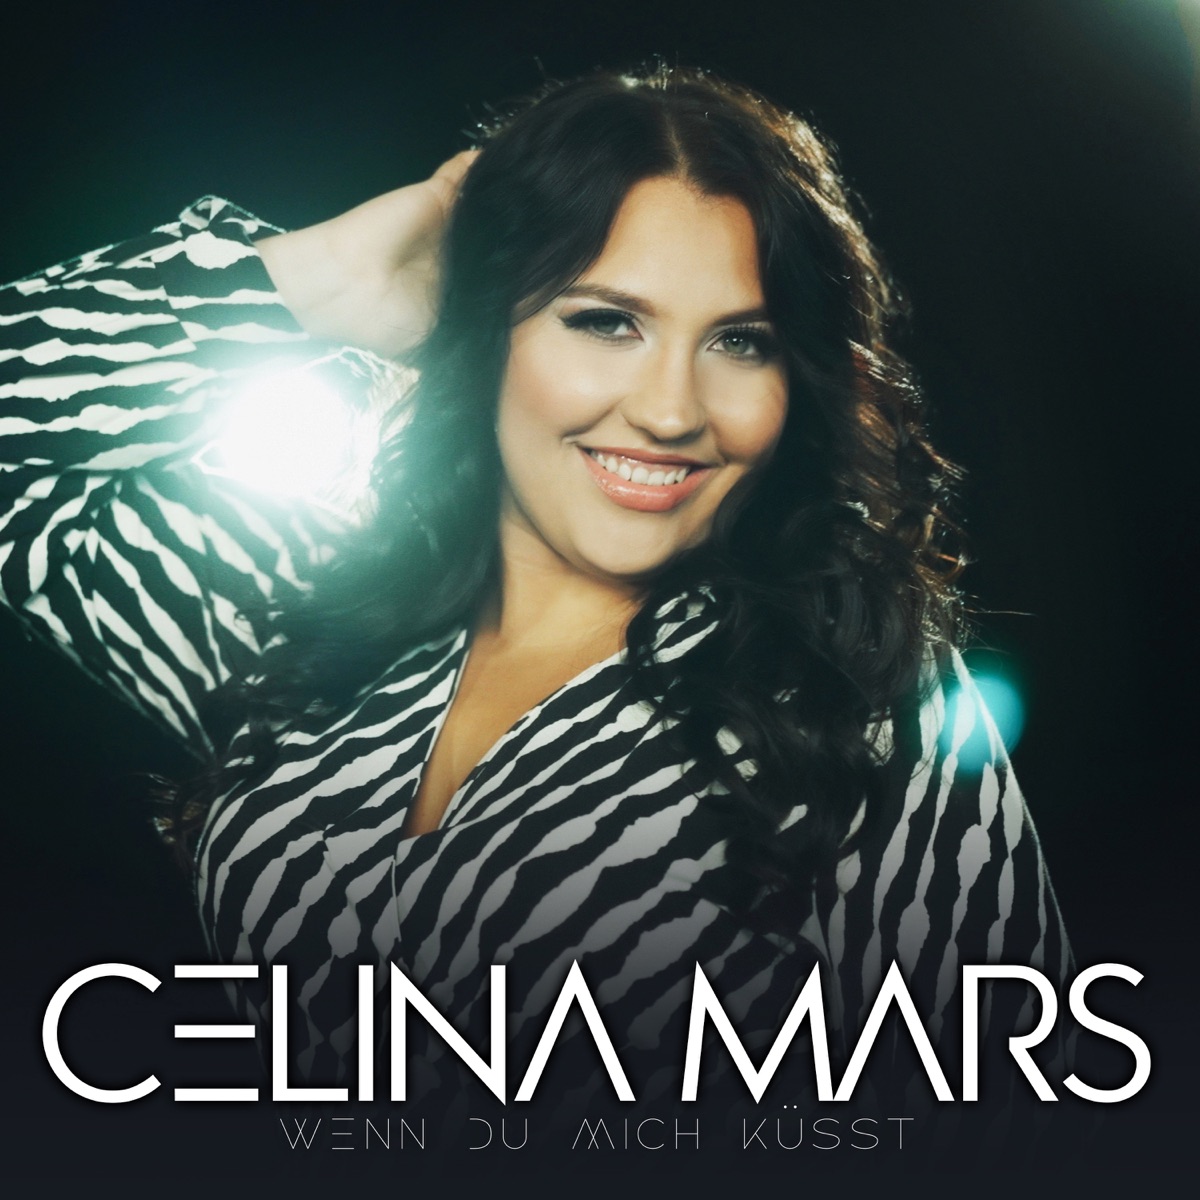 Celina Mars - Wenn du mich küsst 